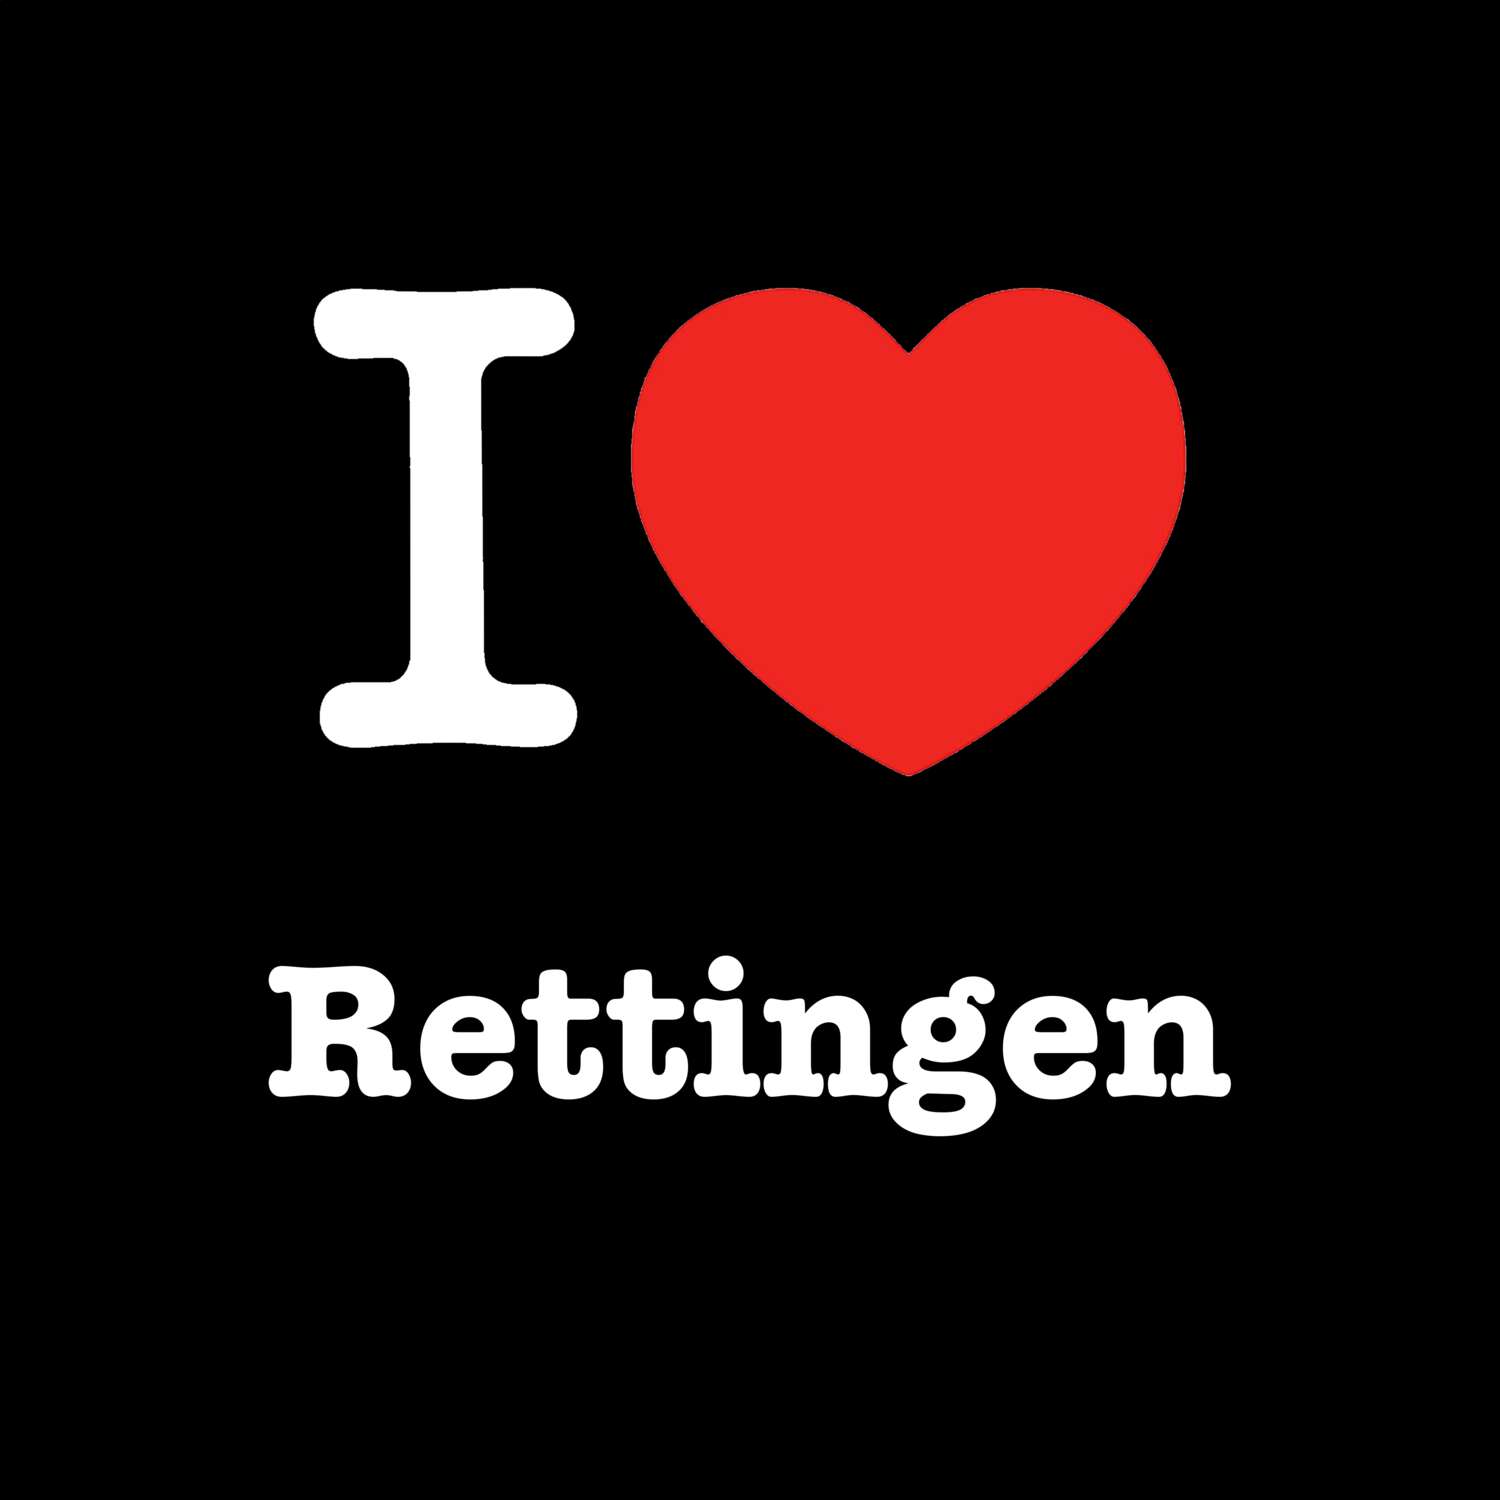 Rettingen T-Shirt »I love«